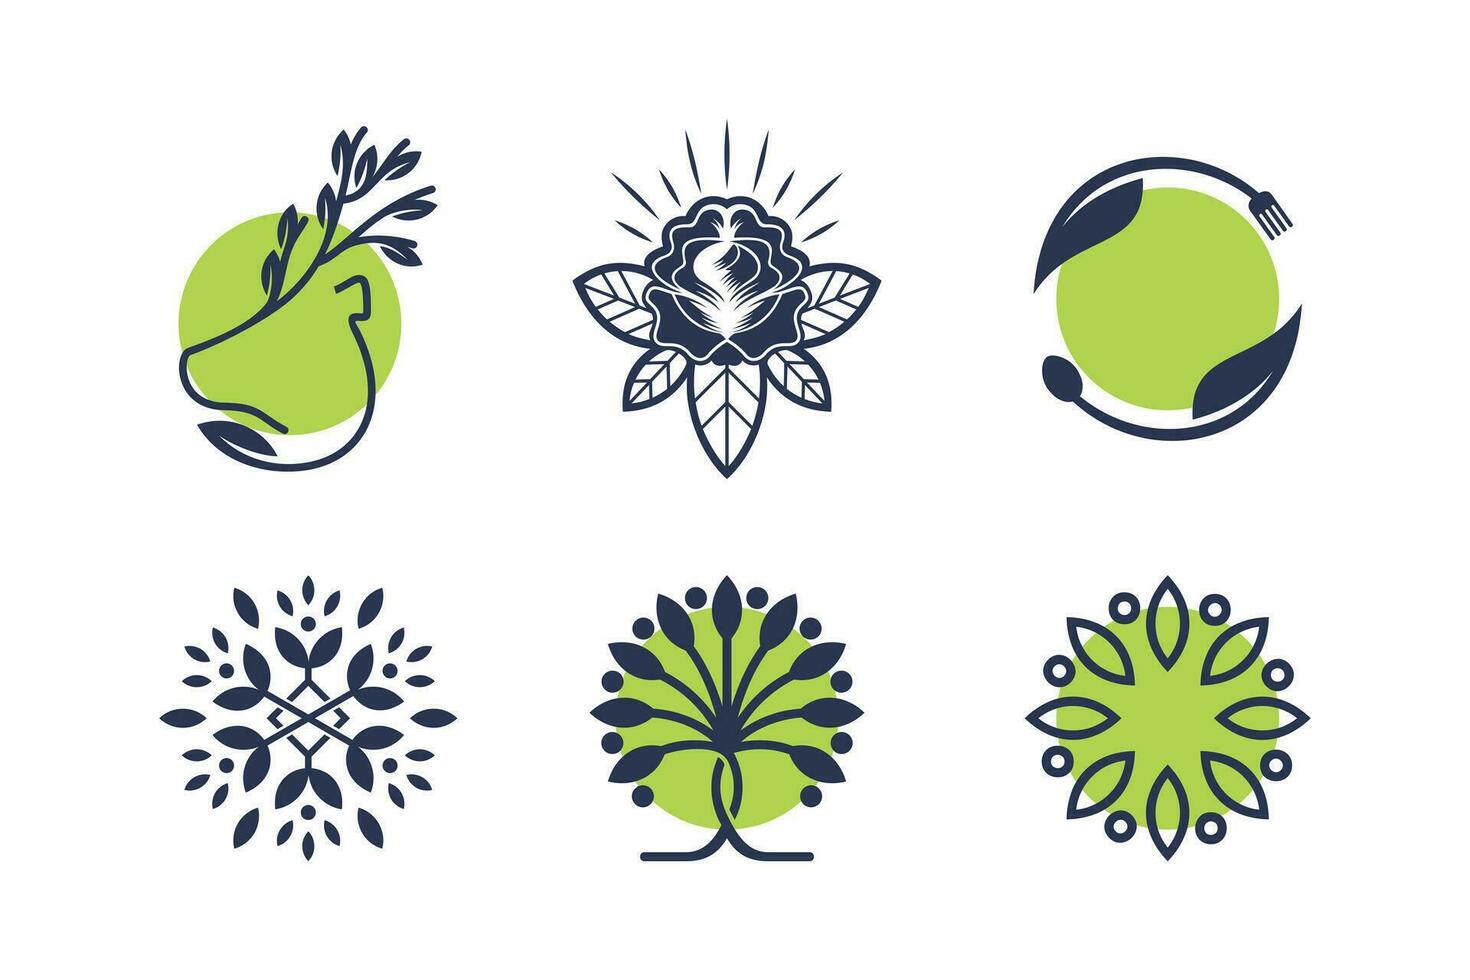 natur logotyp design vektor samling med kreativ unik element aning